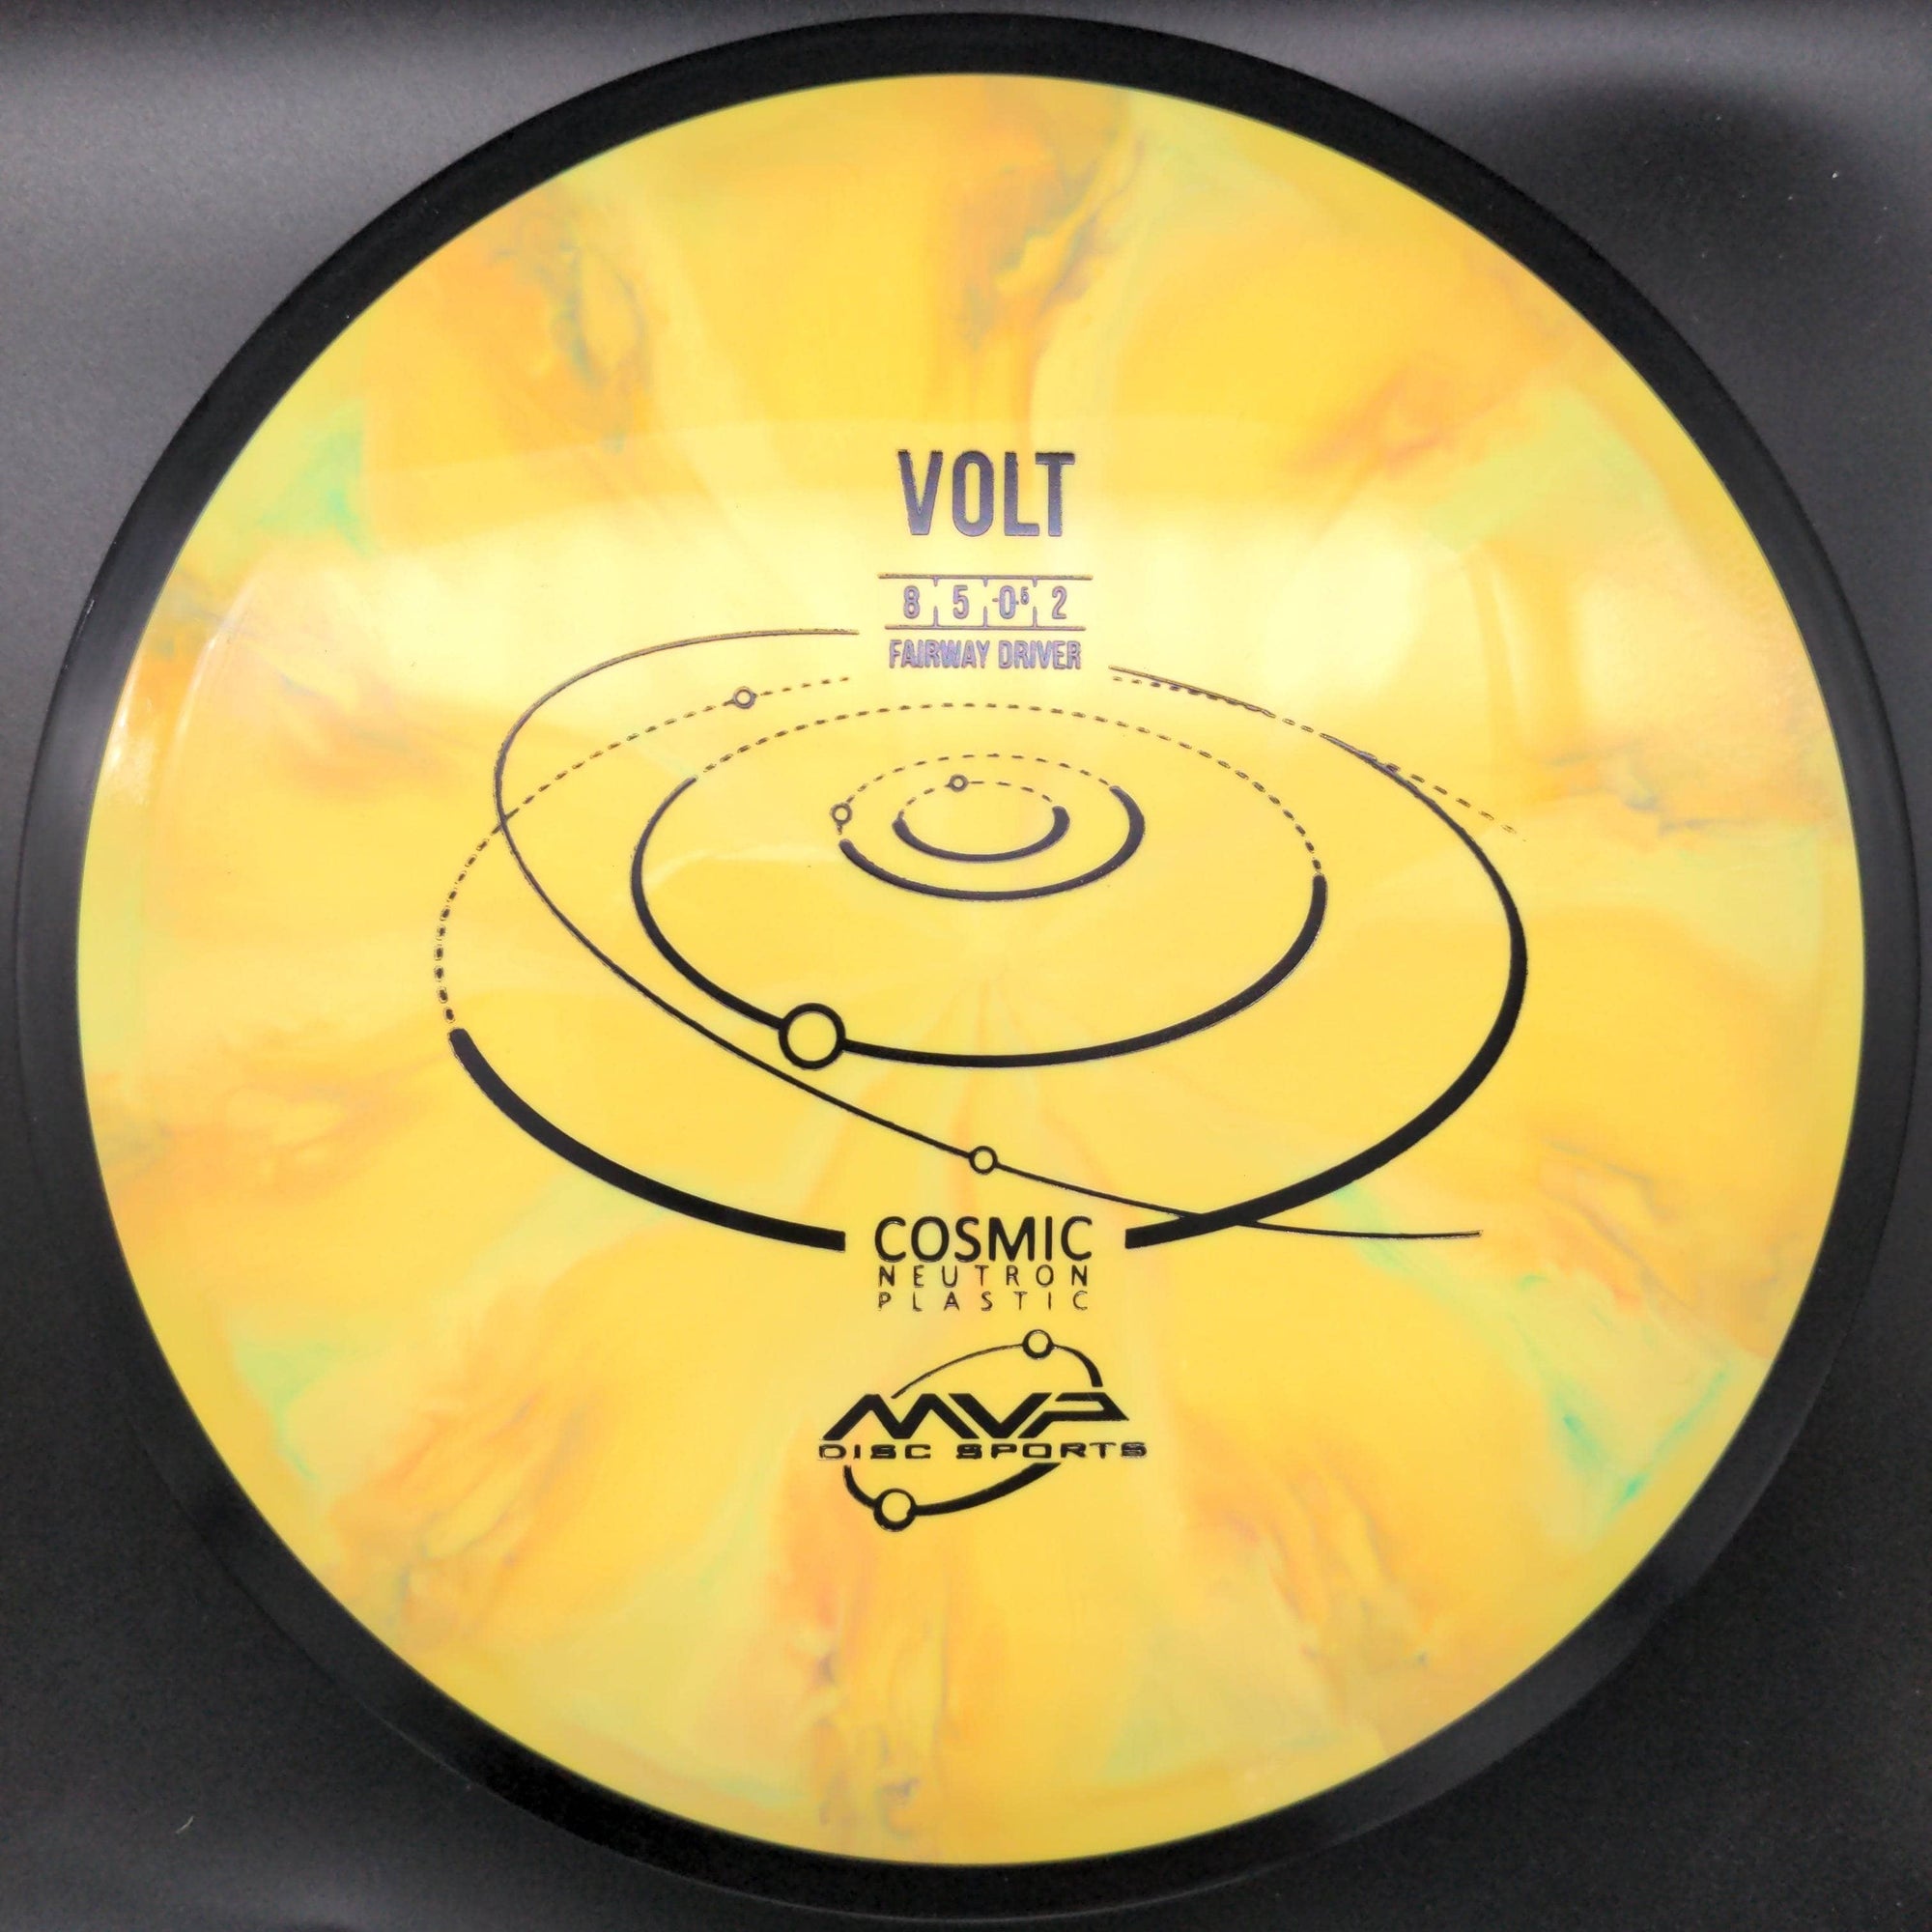 MVP Fairway Driver Yellow 174g Volt, Cosmic Neutron